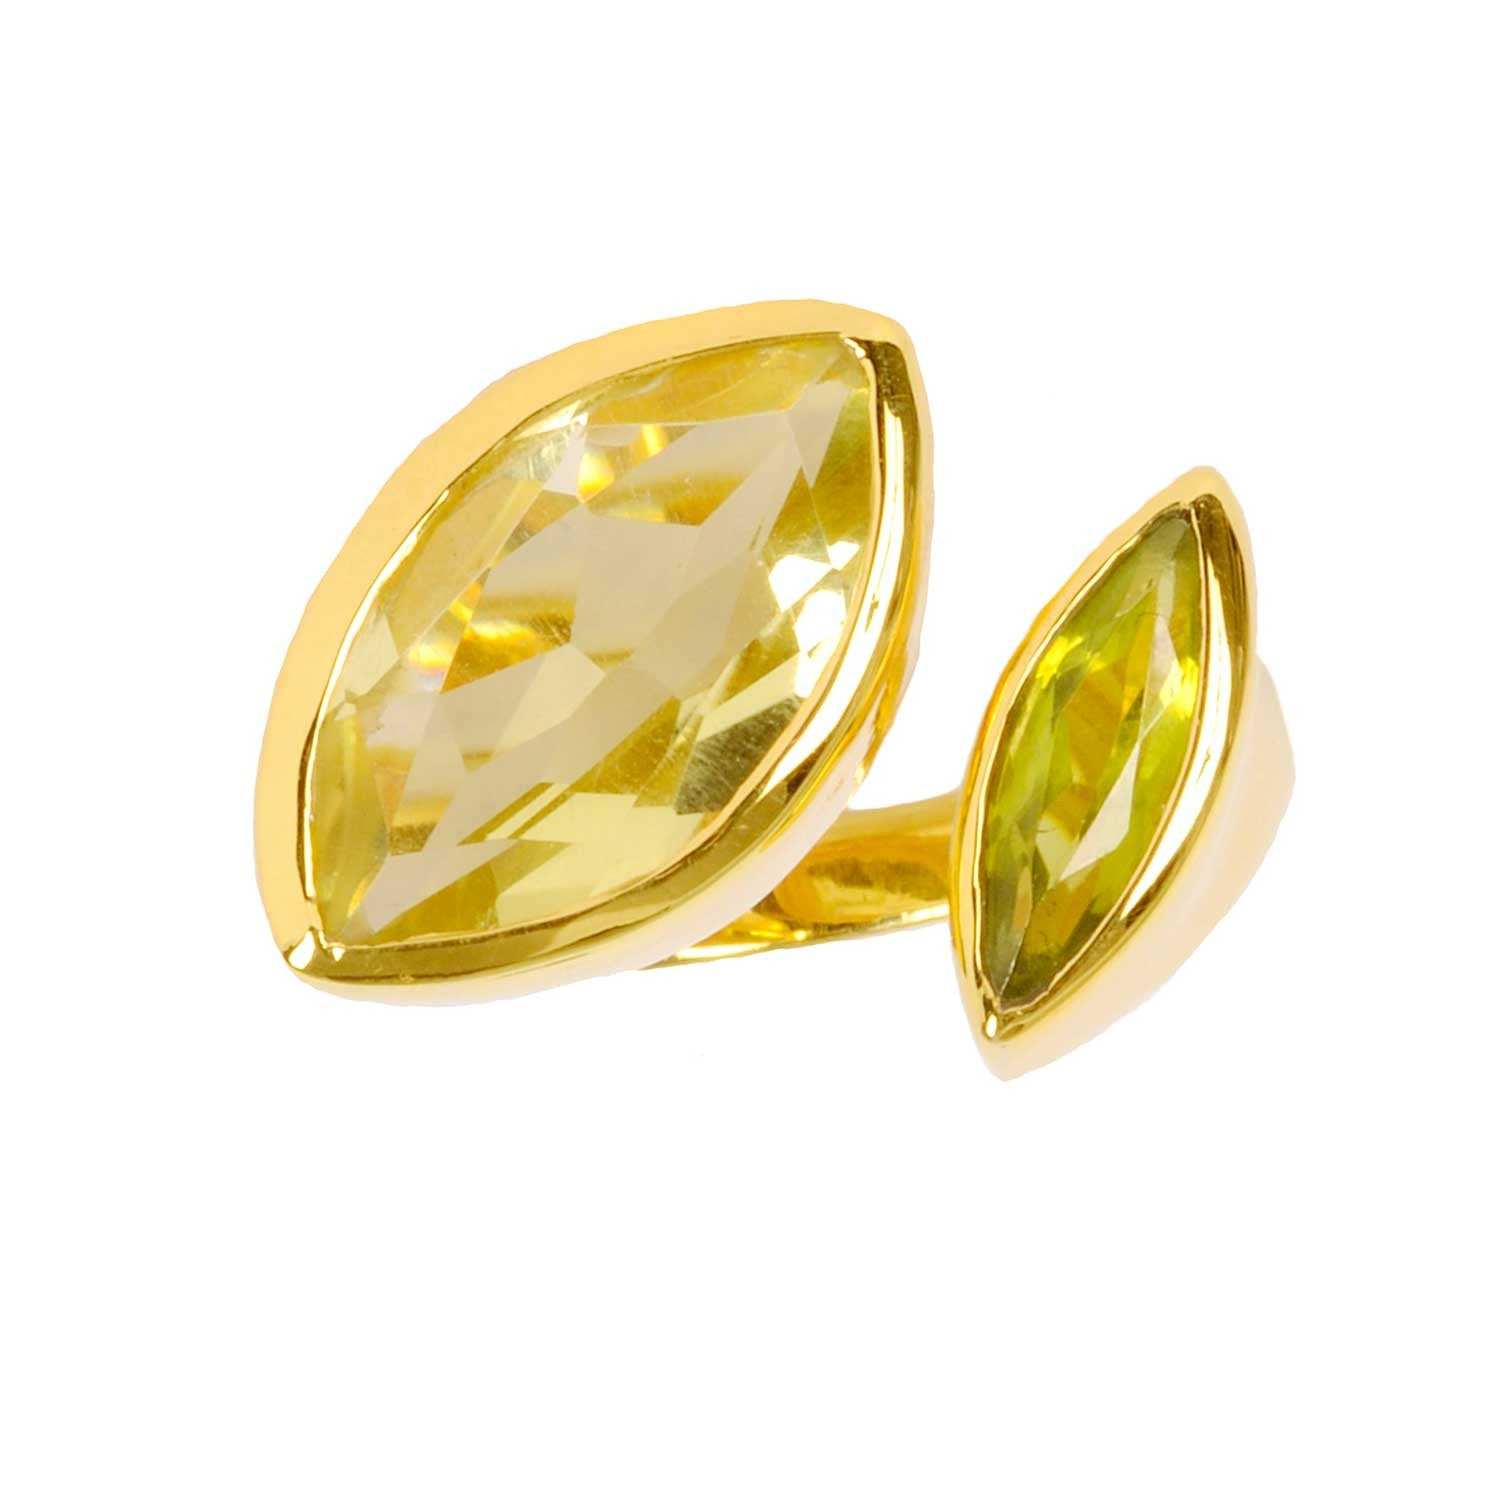 Gold vermeil cocktail ring, lemon quartz, green peridot gemstone, geometric, unique British design